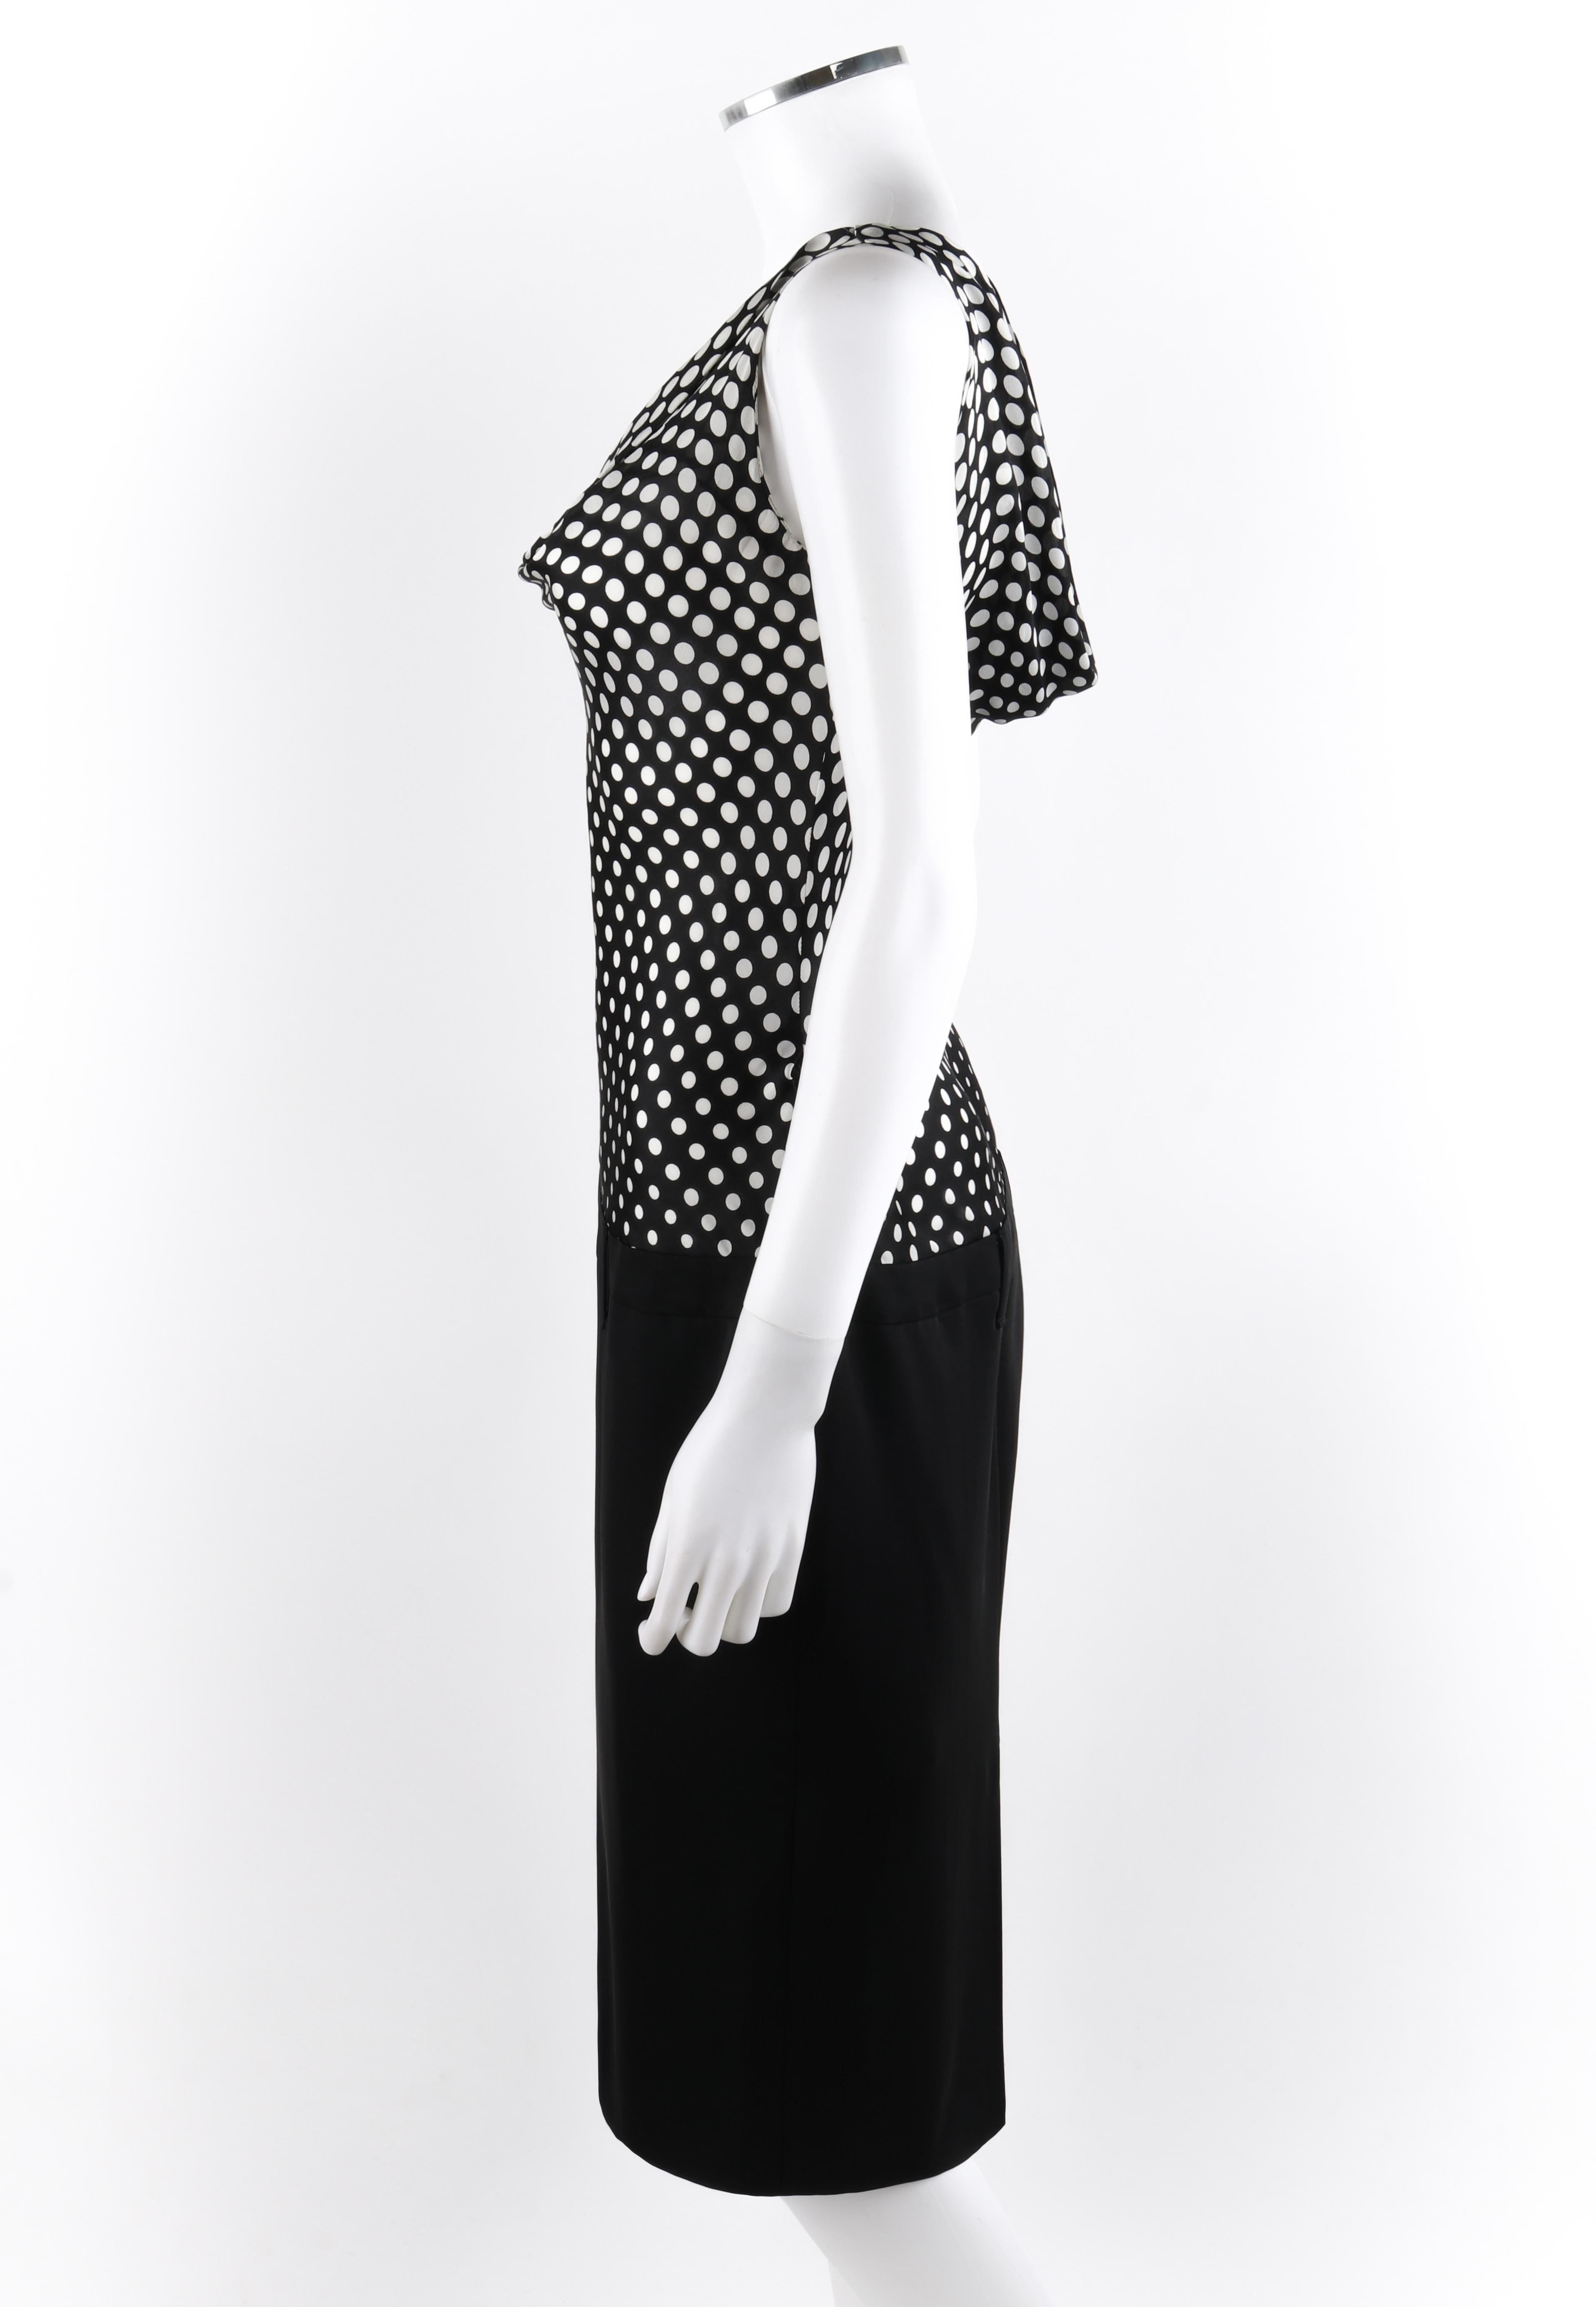 Women's ALEXANDER McQUEEN S/S 2008 Black & White Polka Dot Plunge Neck Sheath Dress